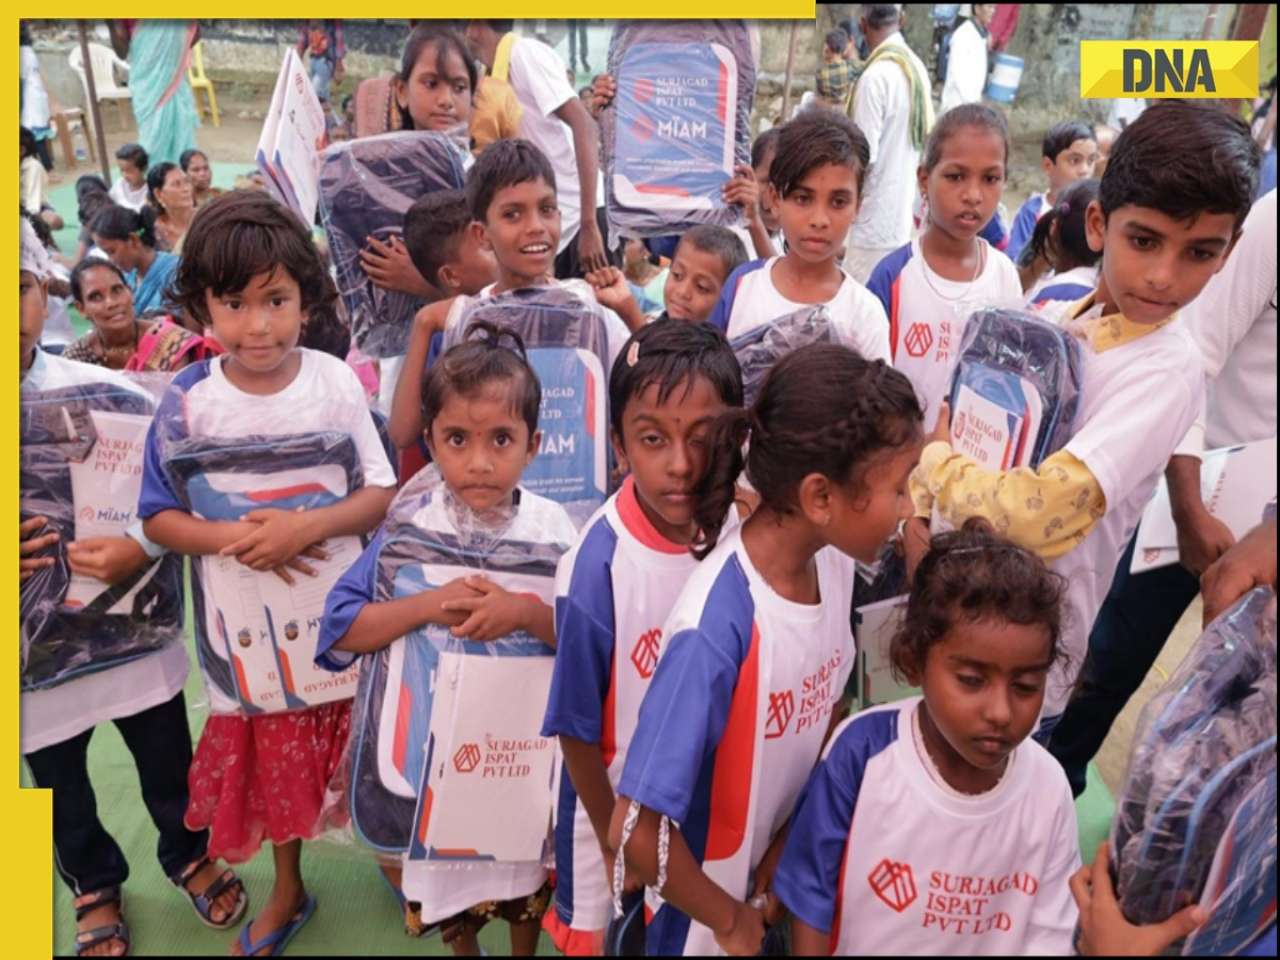 Generous Donations aid Adivasi Women and Children: Miam Charitable Trust and Surjagad Ispat Pvt Ltd lead the way